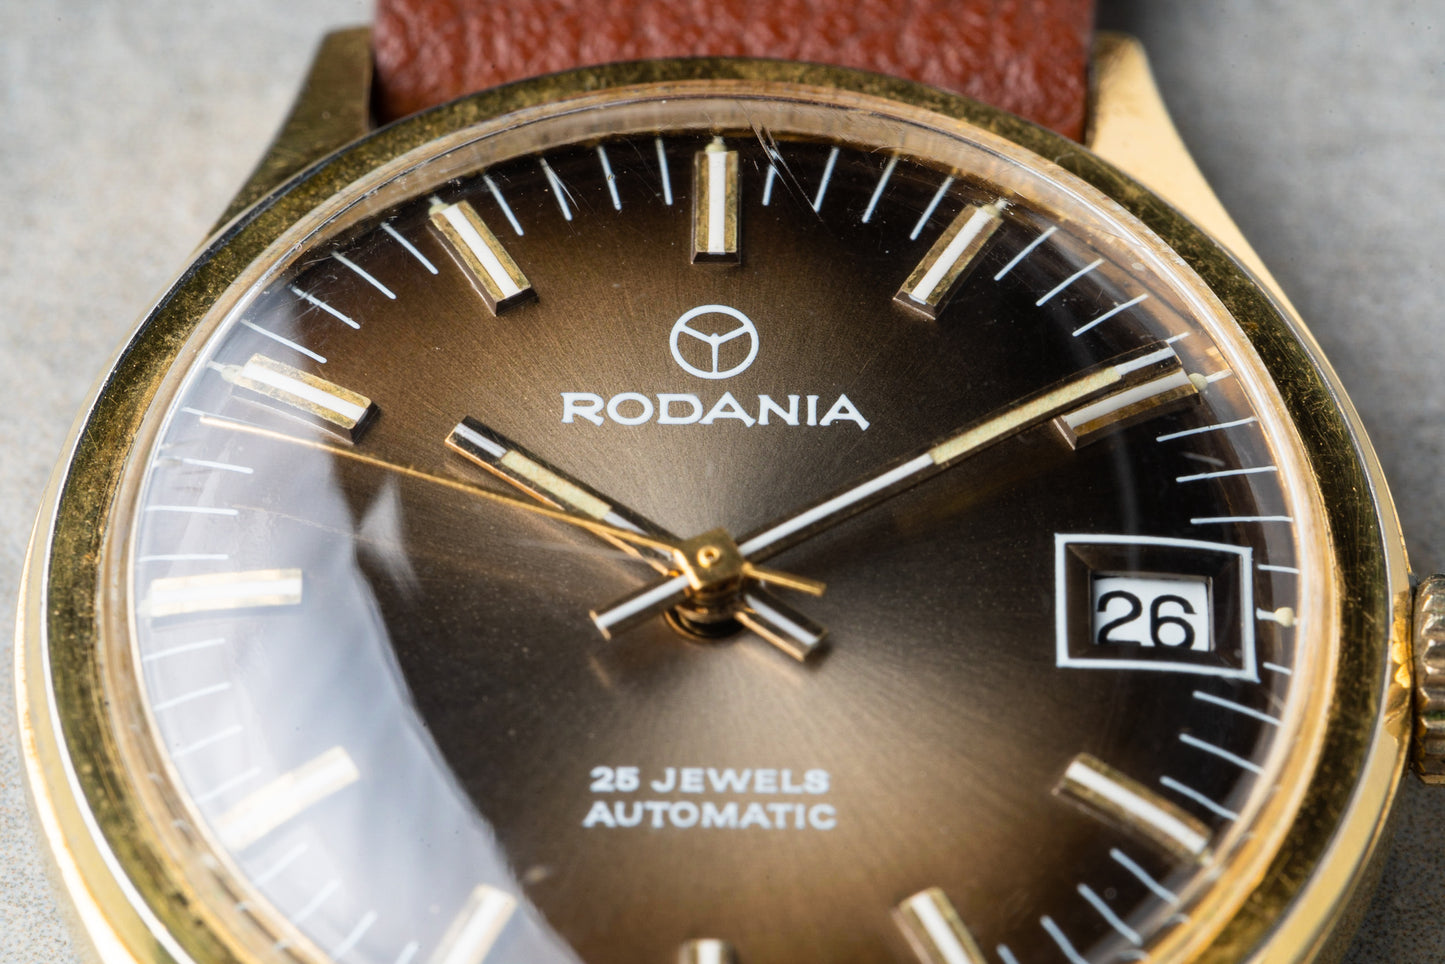 Rodania Automatic Date